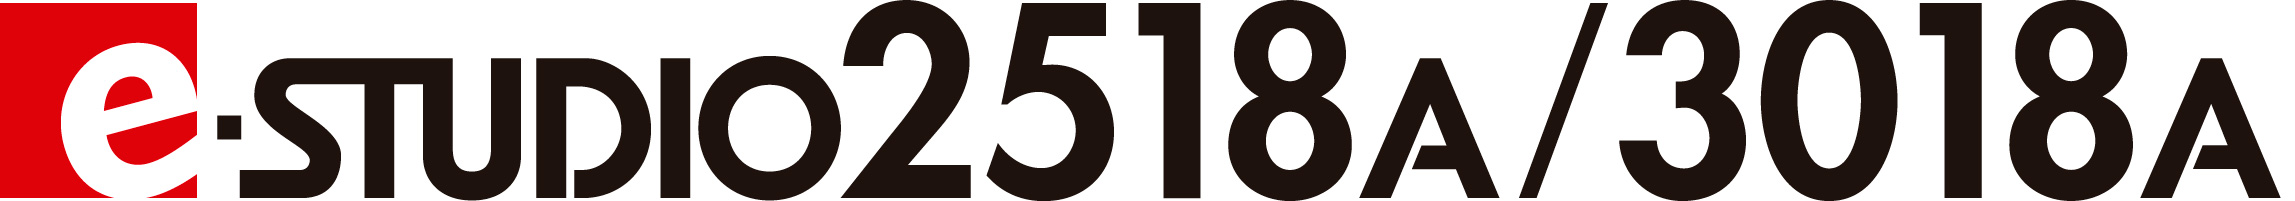 Logo e-STUDIO2518A/3018A